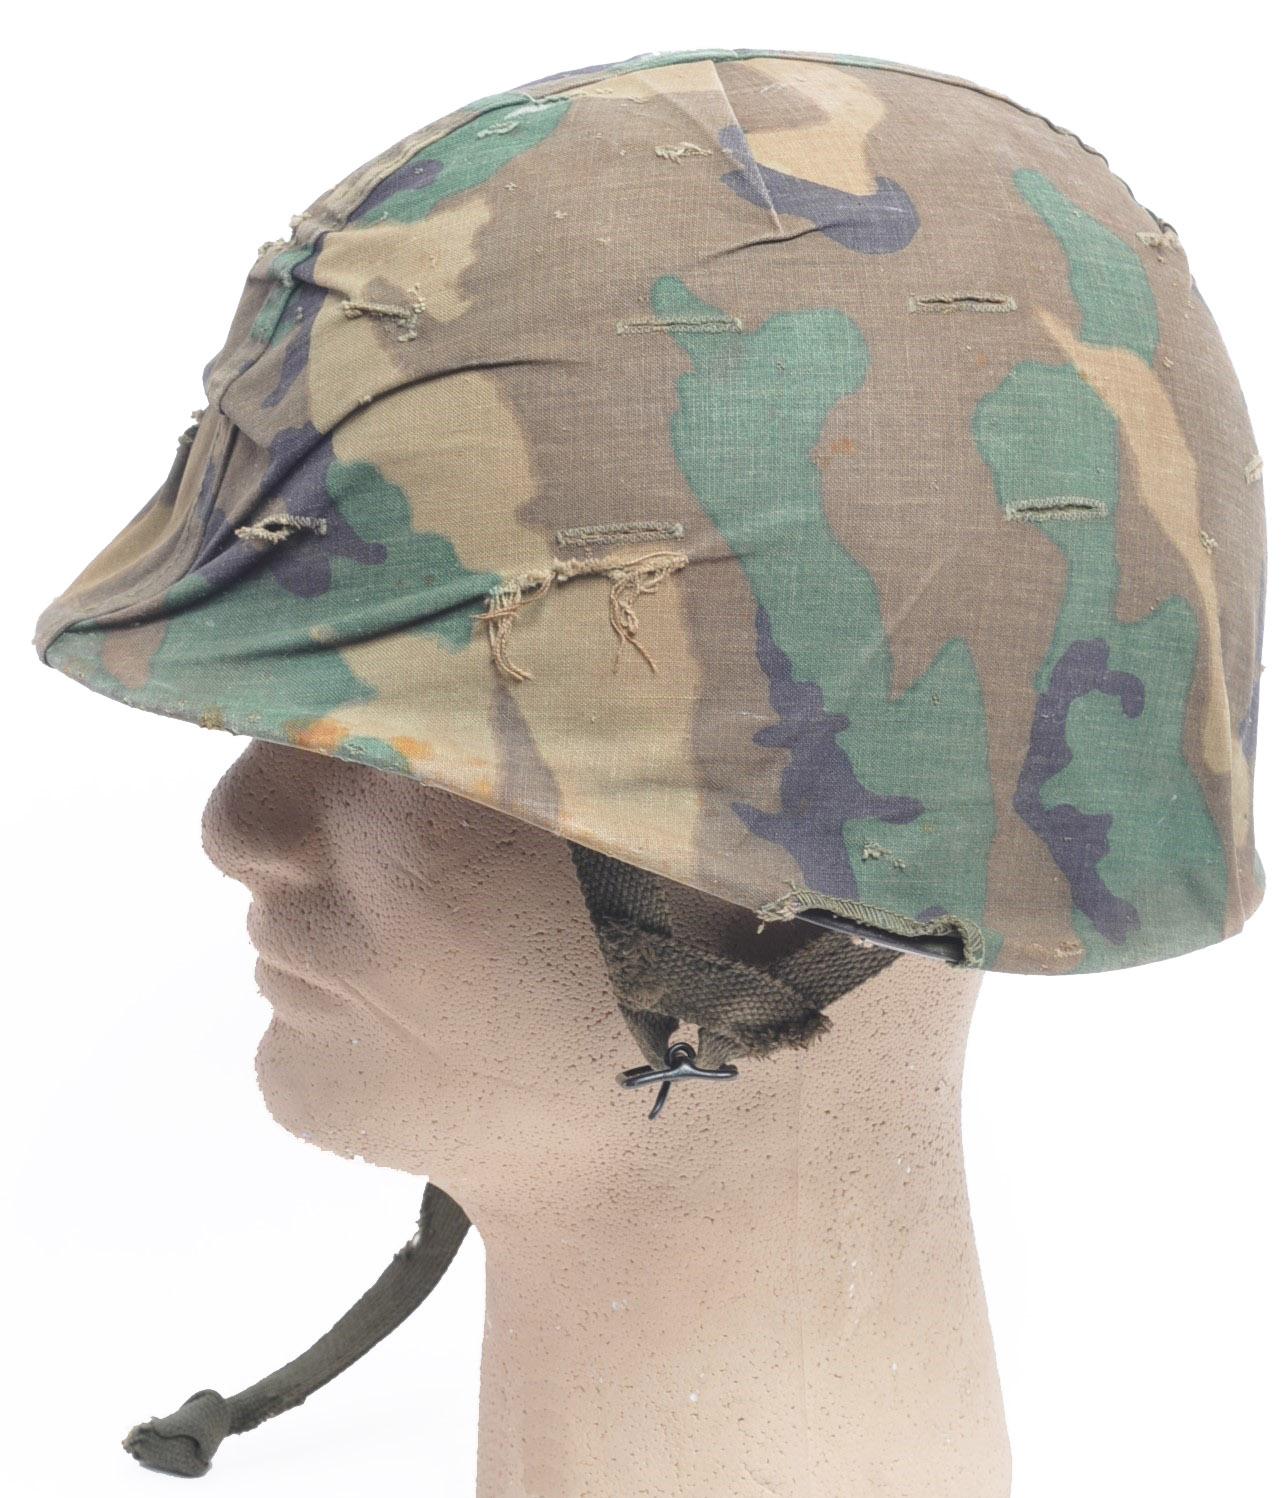 US Military 1970-80s era M1 Helmet, Liner amd Camo Cover (RSO)